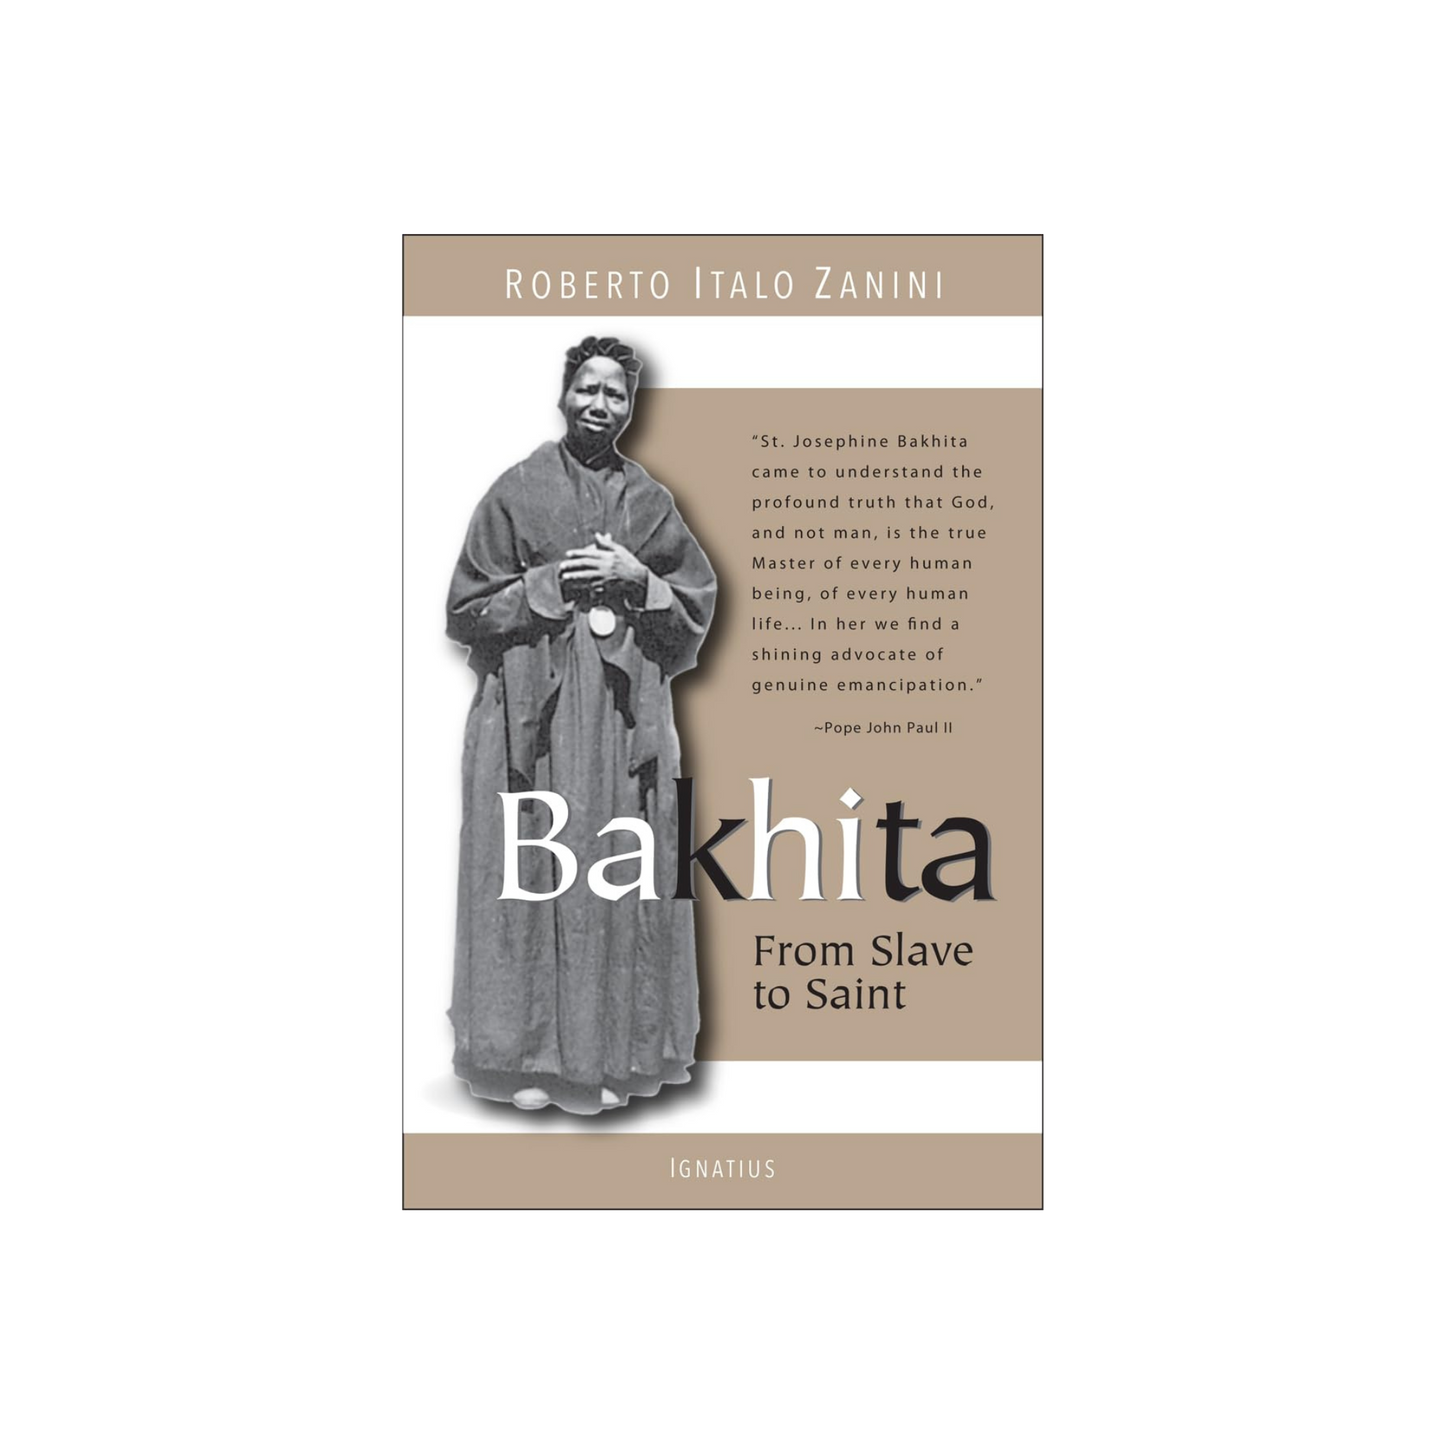 Bakhita, From Slave to Saint